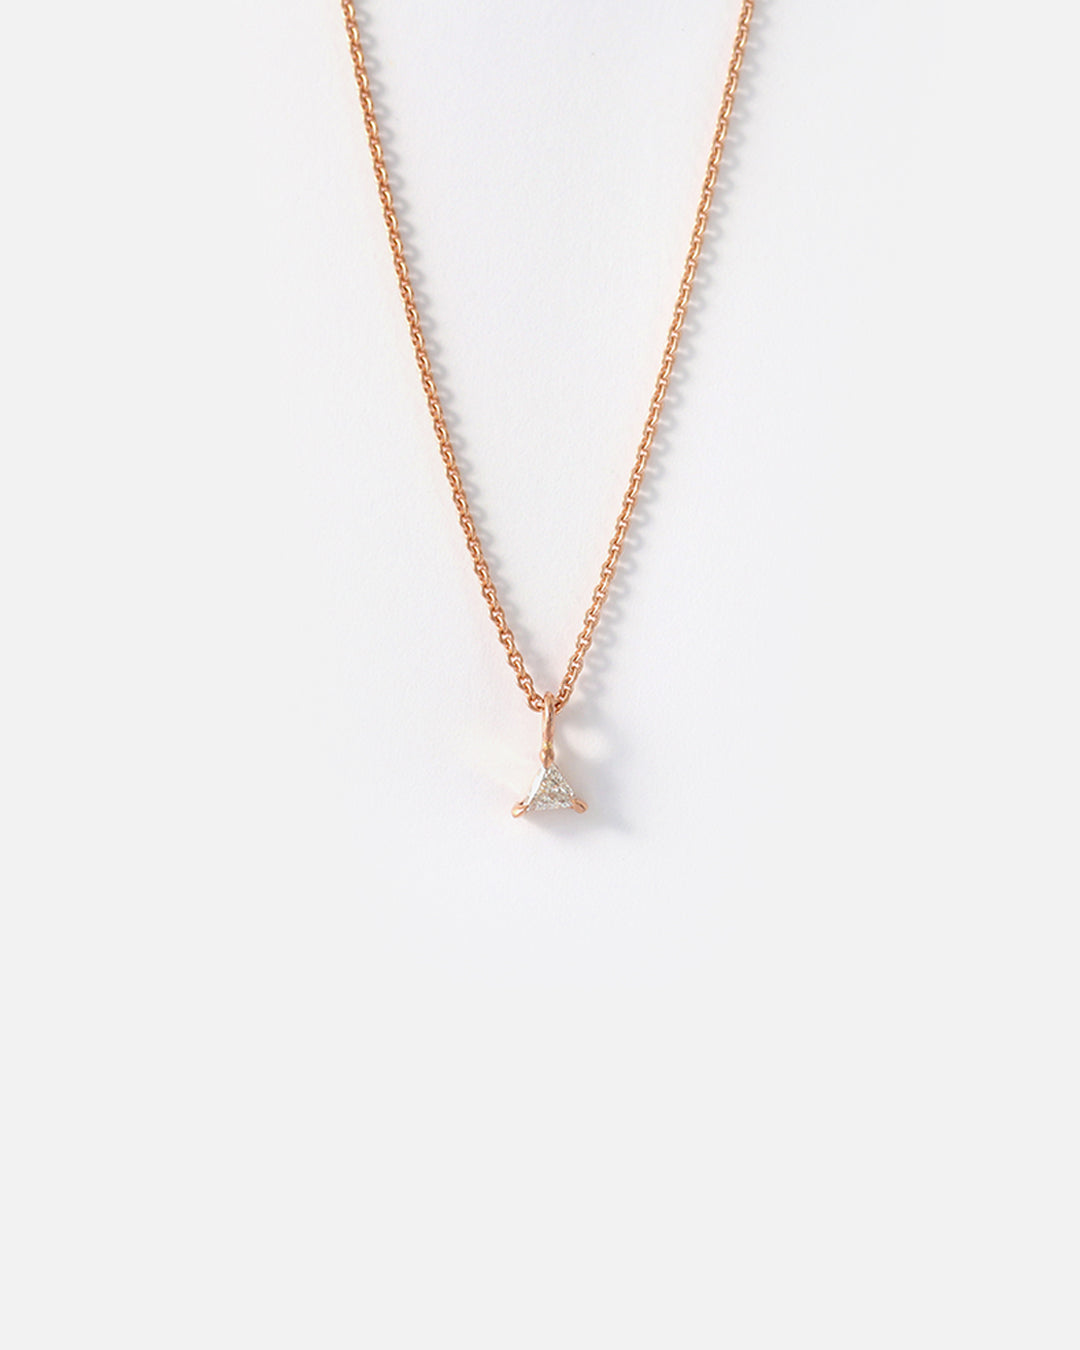 Cati / Single Trilliant Pendant By fitzgerald jewelry in pendants Category